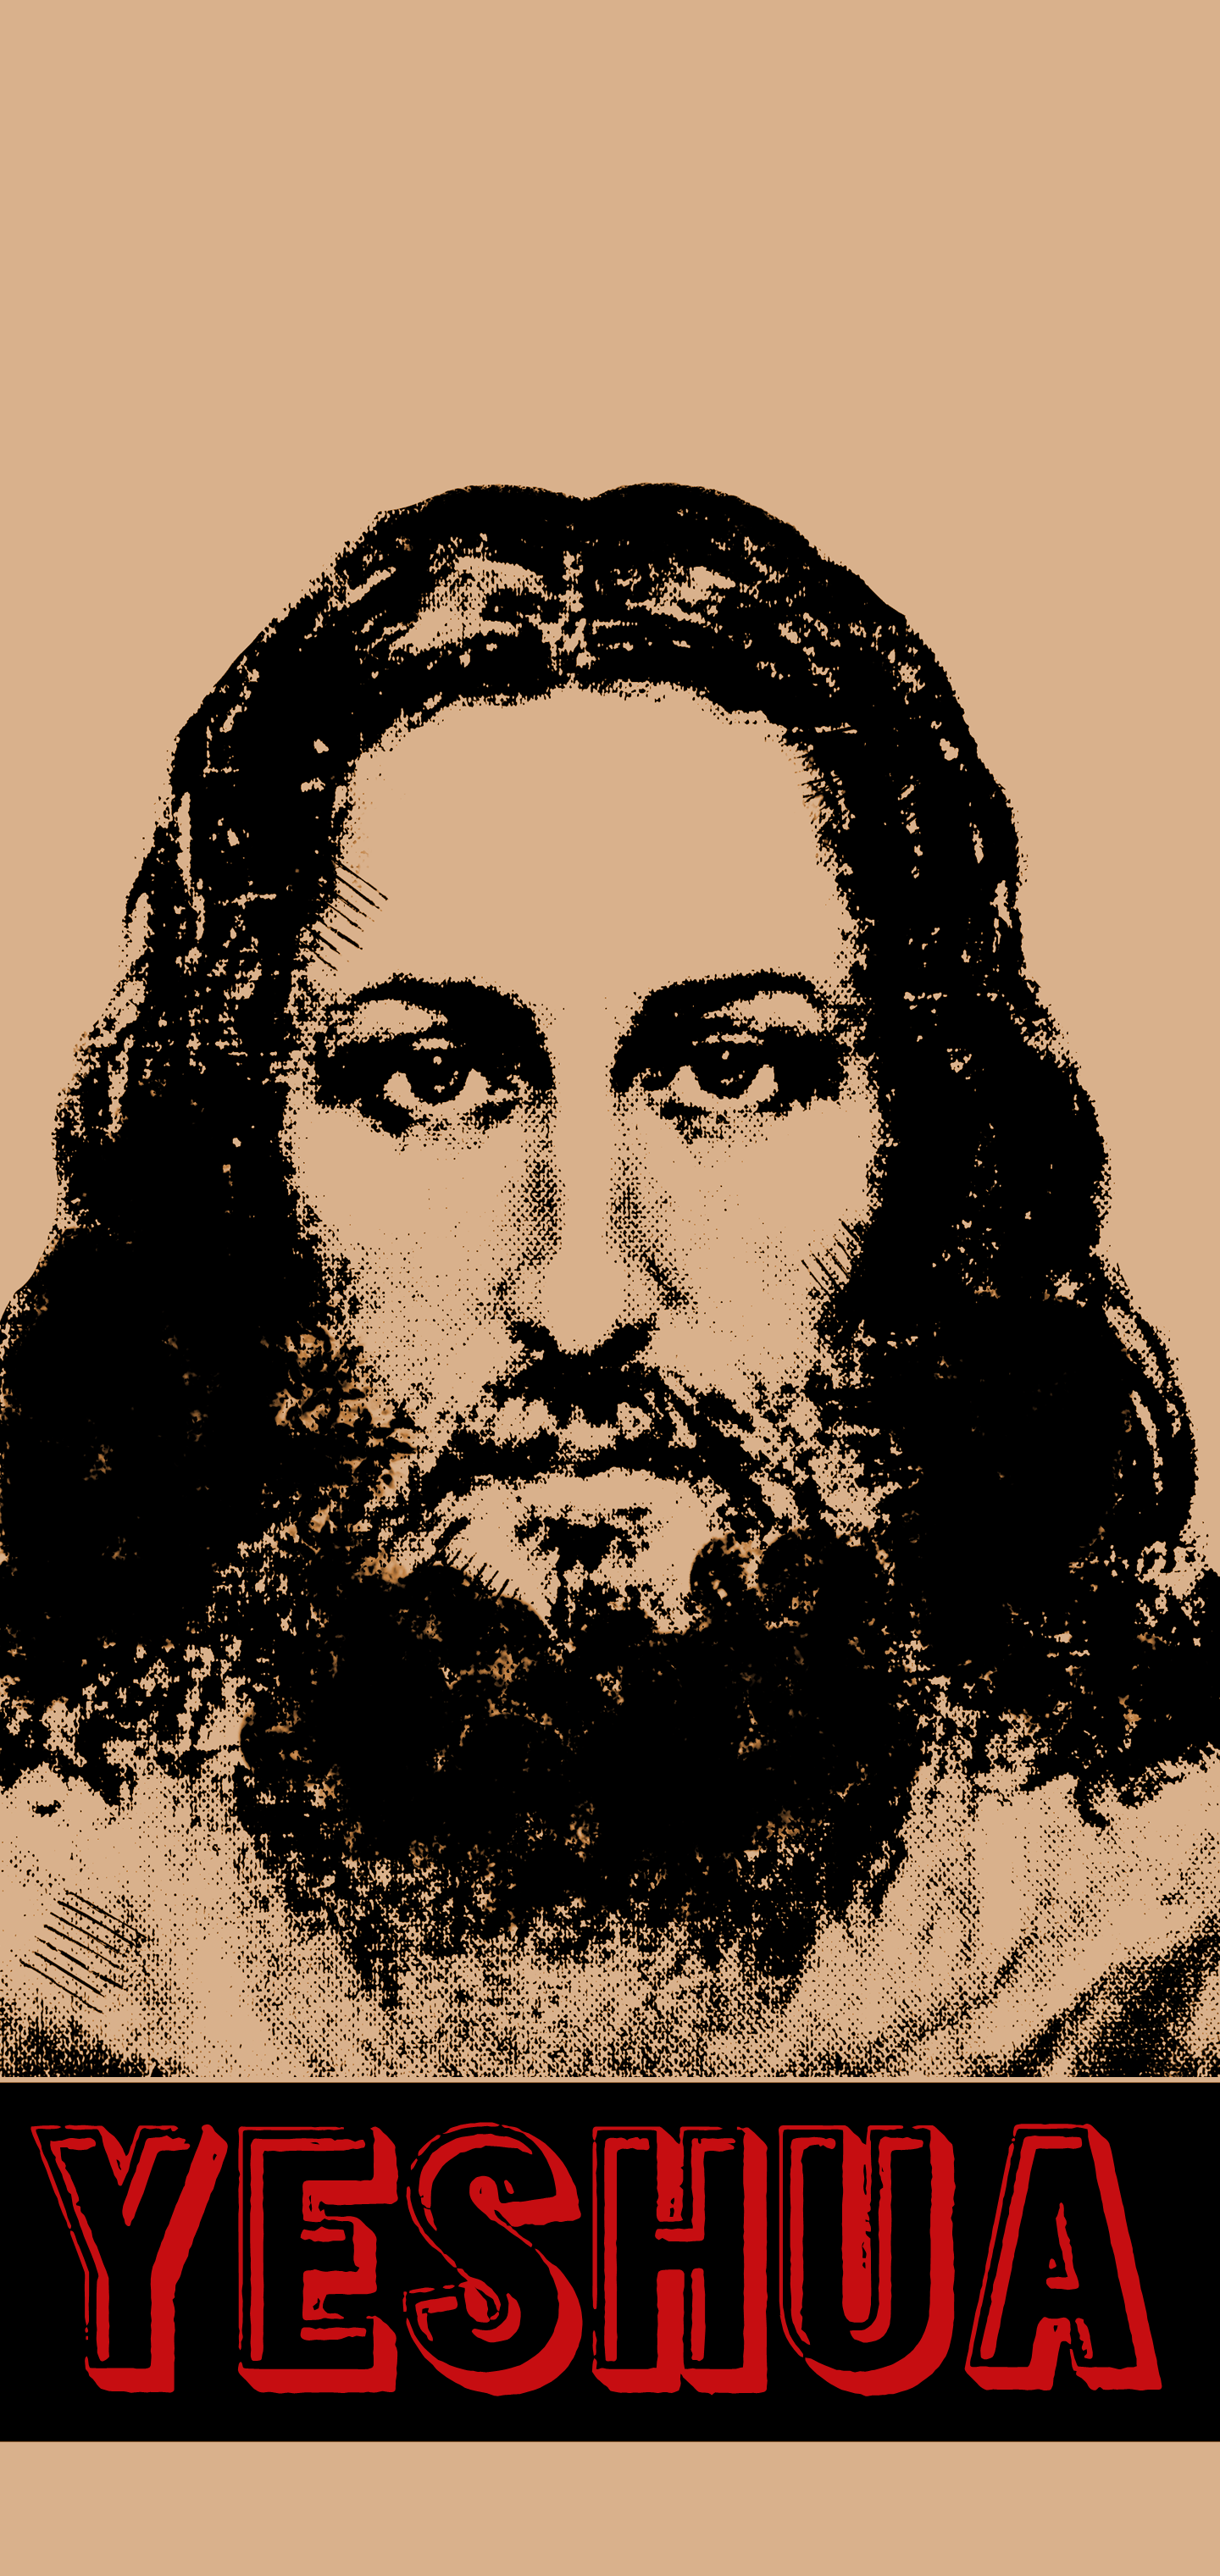 Jesus Christ Face Men Beard Portrait Display Looking At Viewer 1440x3041